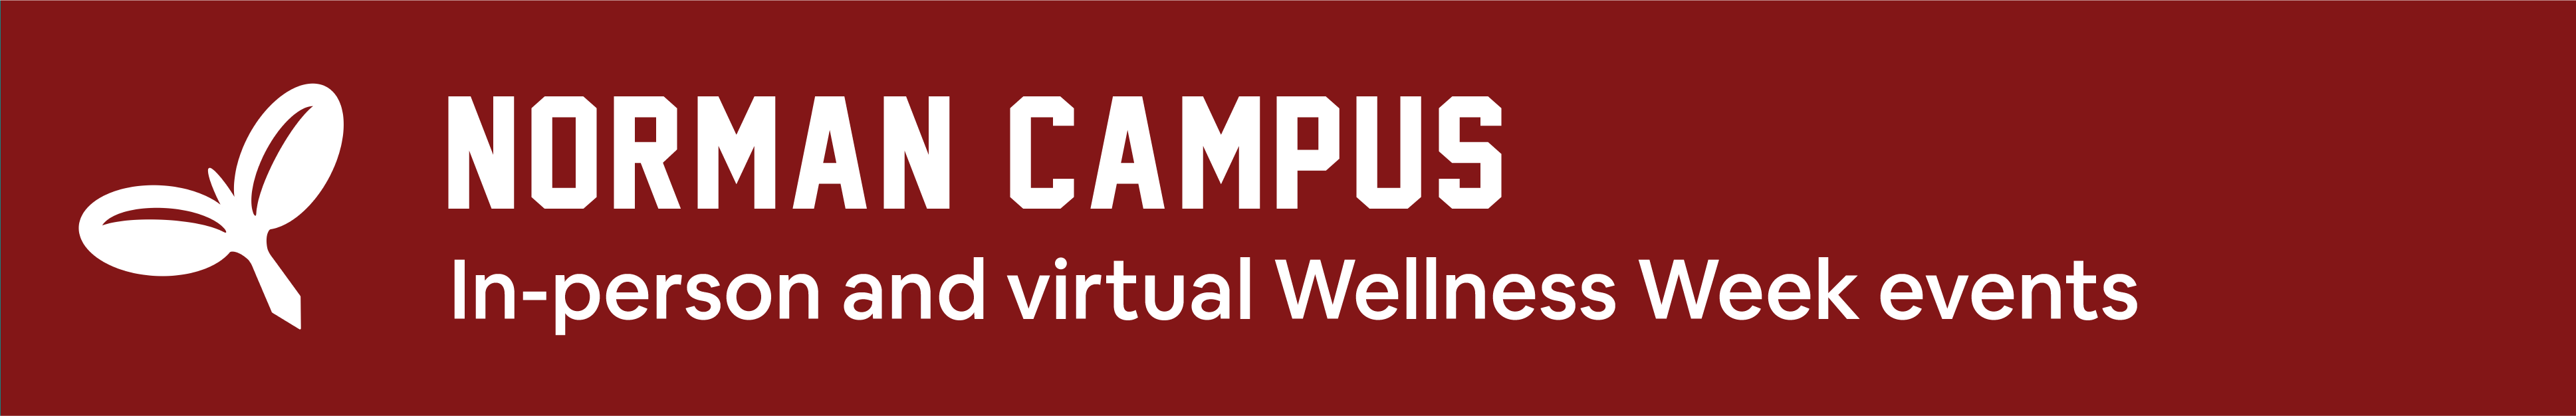 Norman Campus wellness week events.